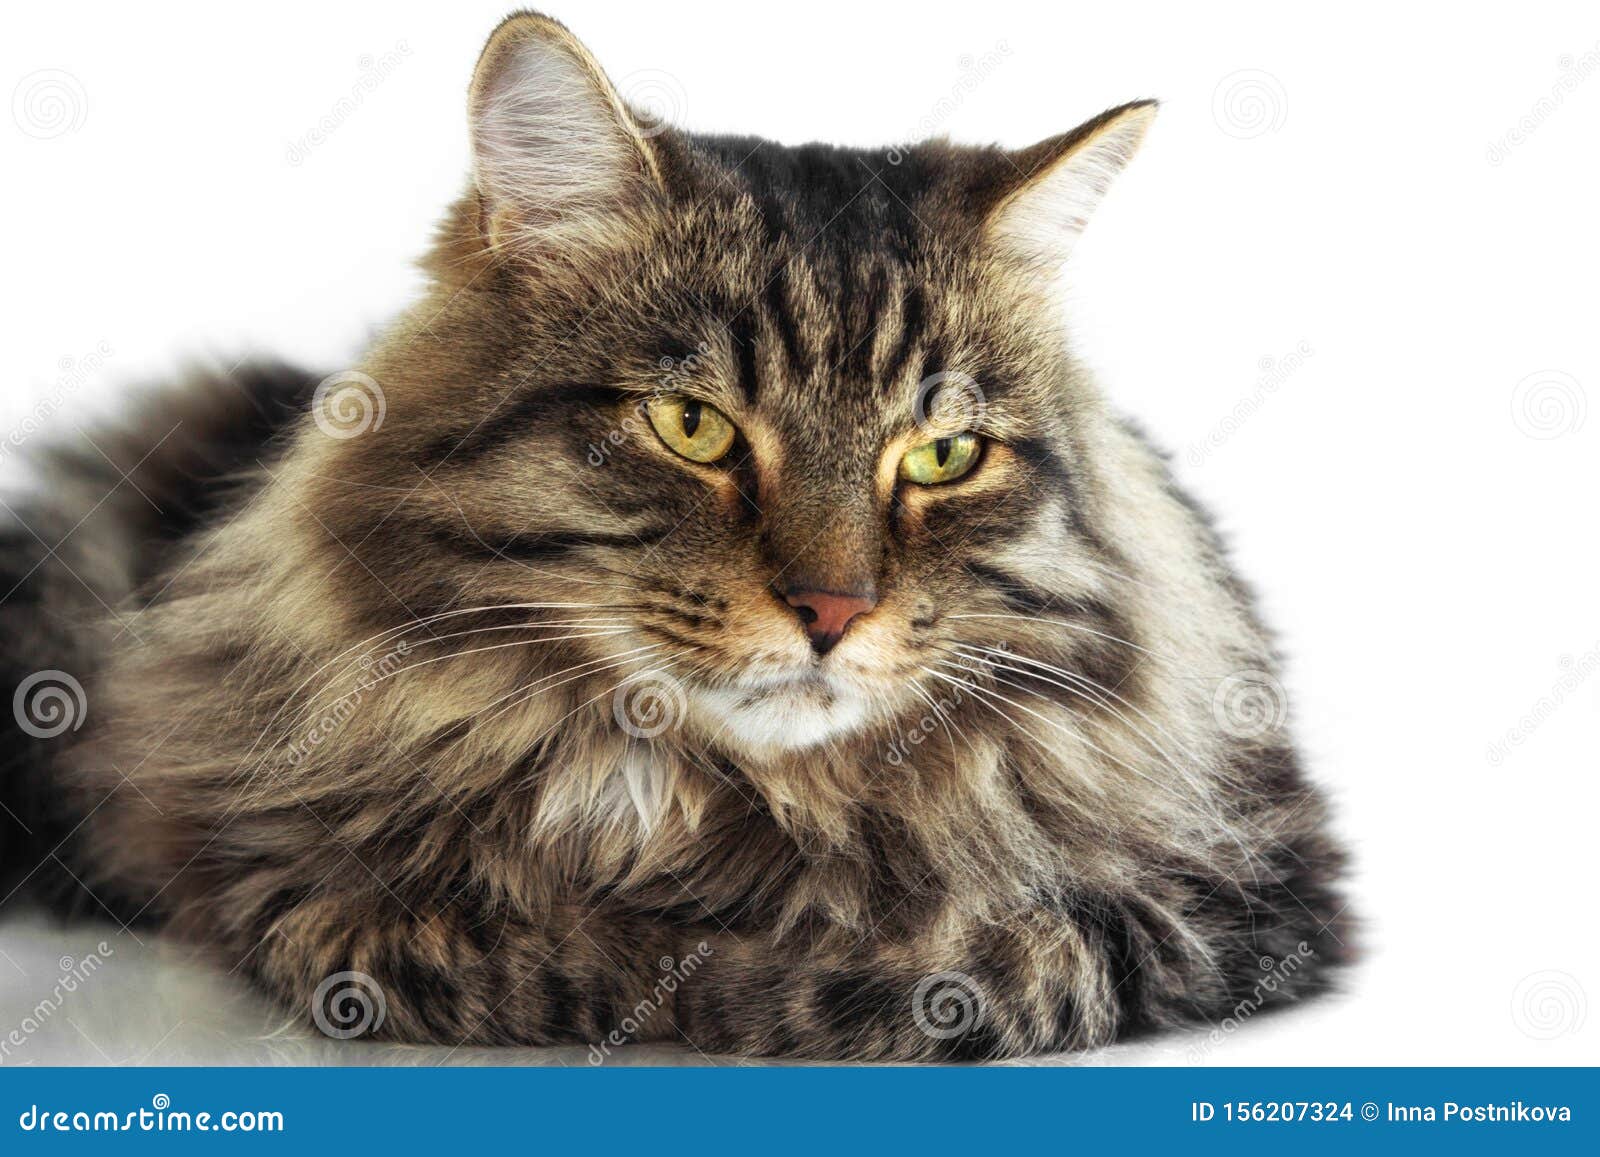  Shaggy Tabby  Cat Portrait On White Background Stock Photo 